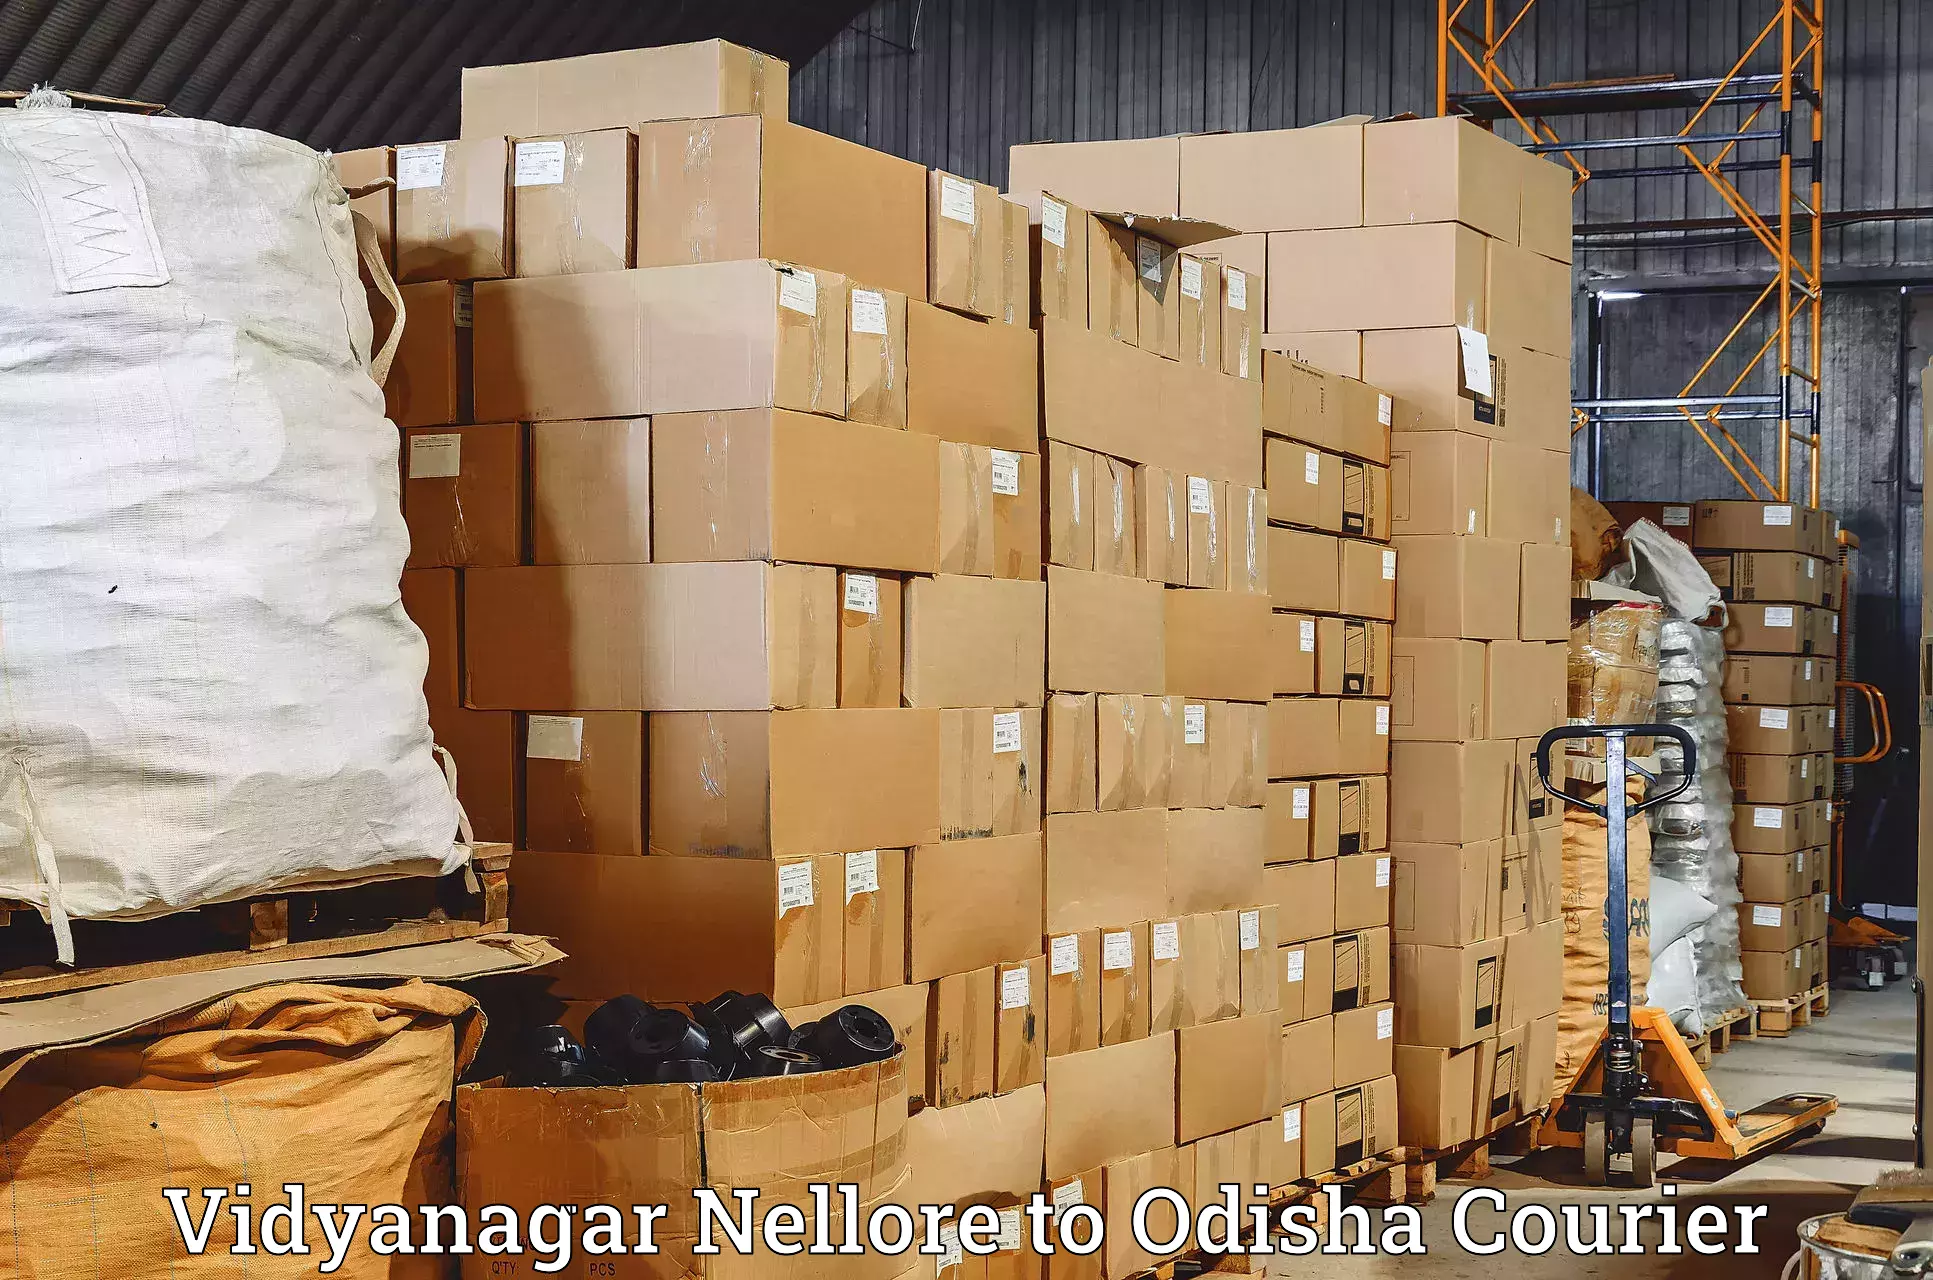 International courier networks Vidyanagar Nellore to Baripada